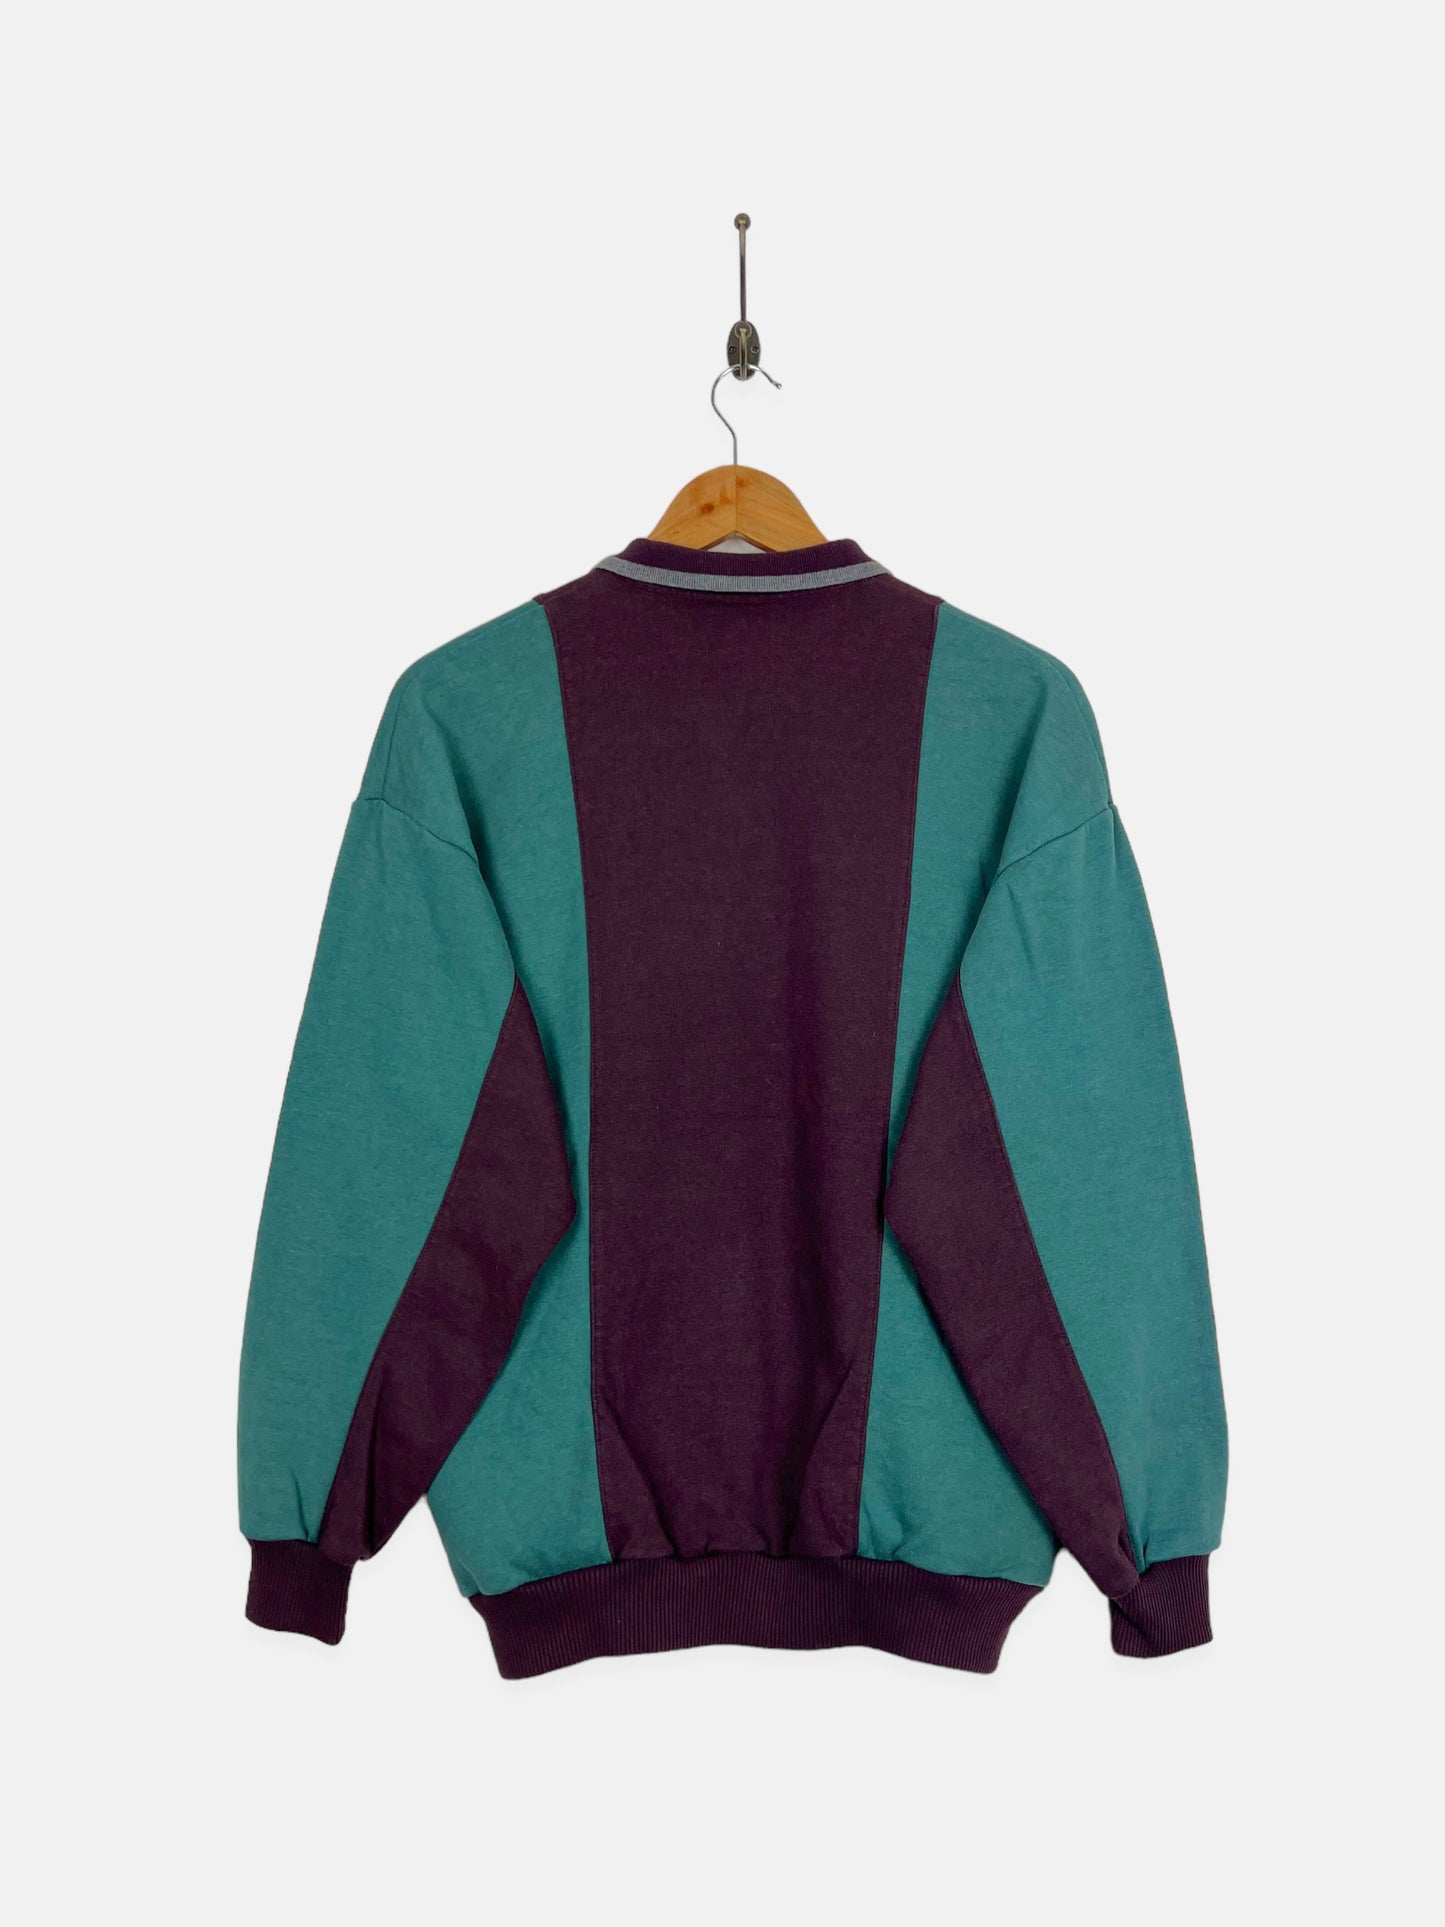 90's Colour-Block Vintage Collared Sweatshirt Size 10-12